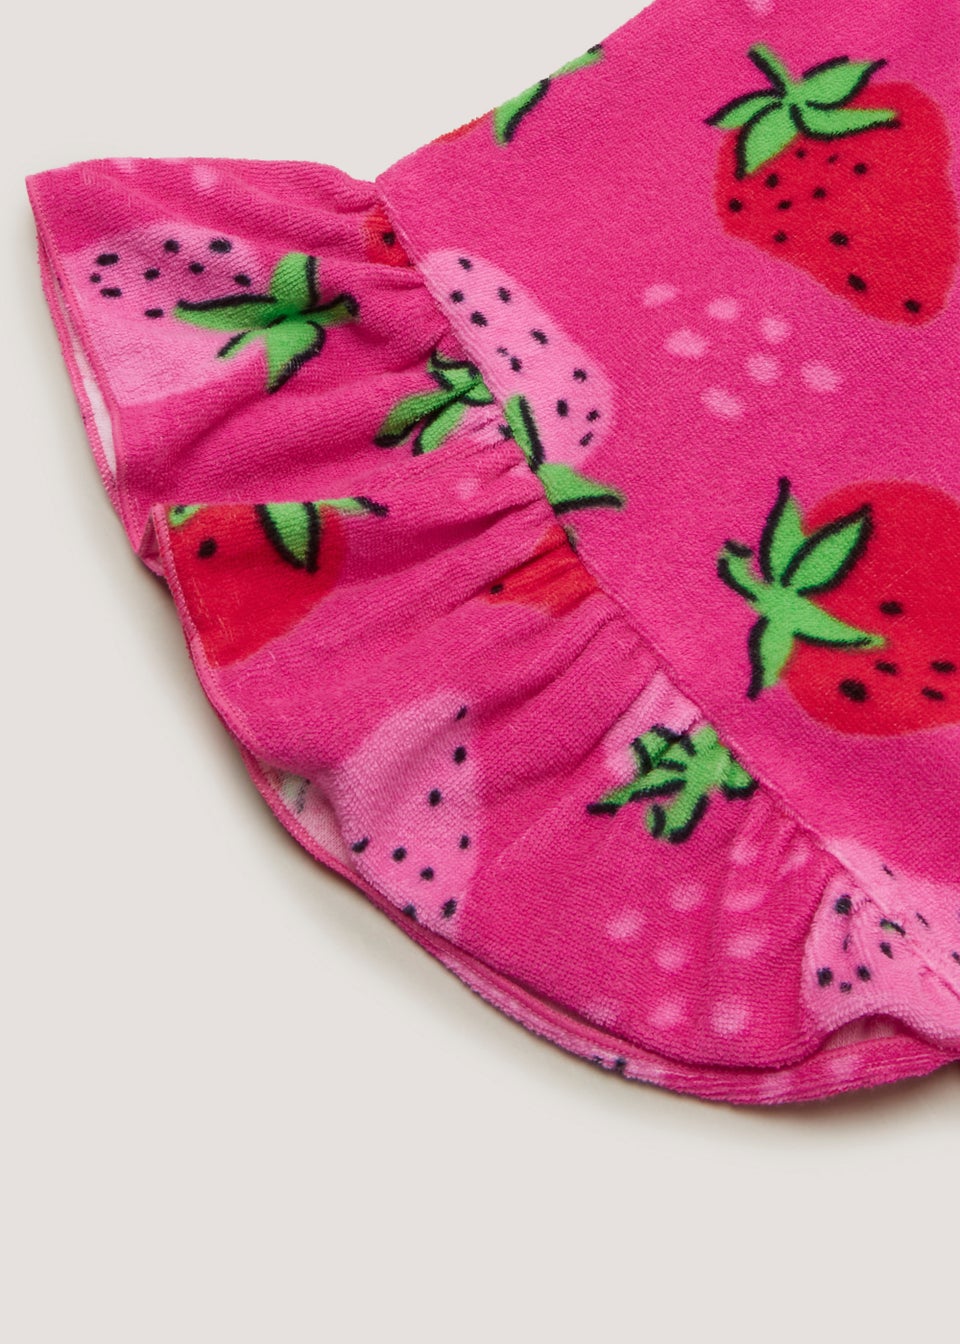 Girls Pink Strawberry Hooded Beach Towel Poncho (9mths-6yrs)